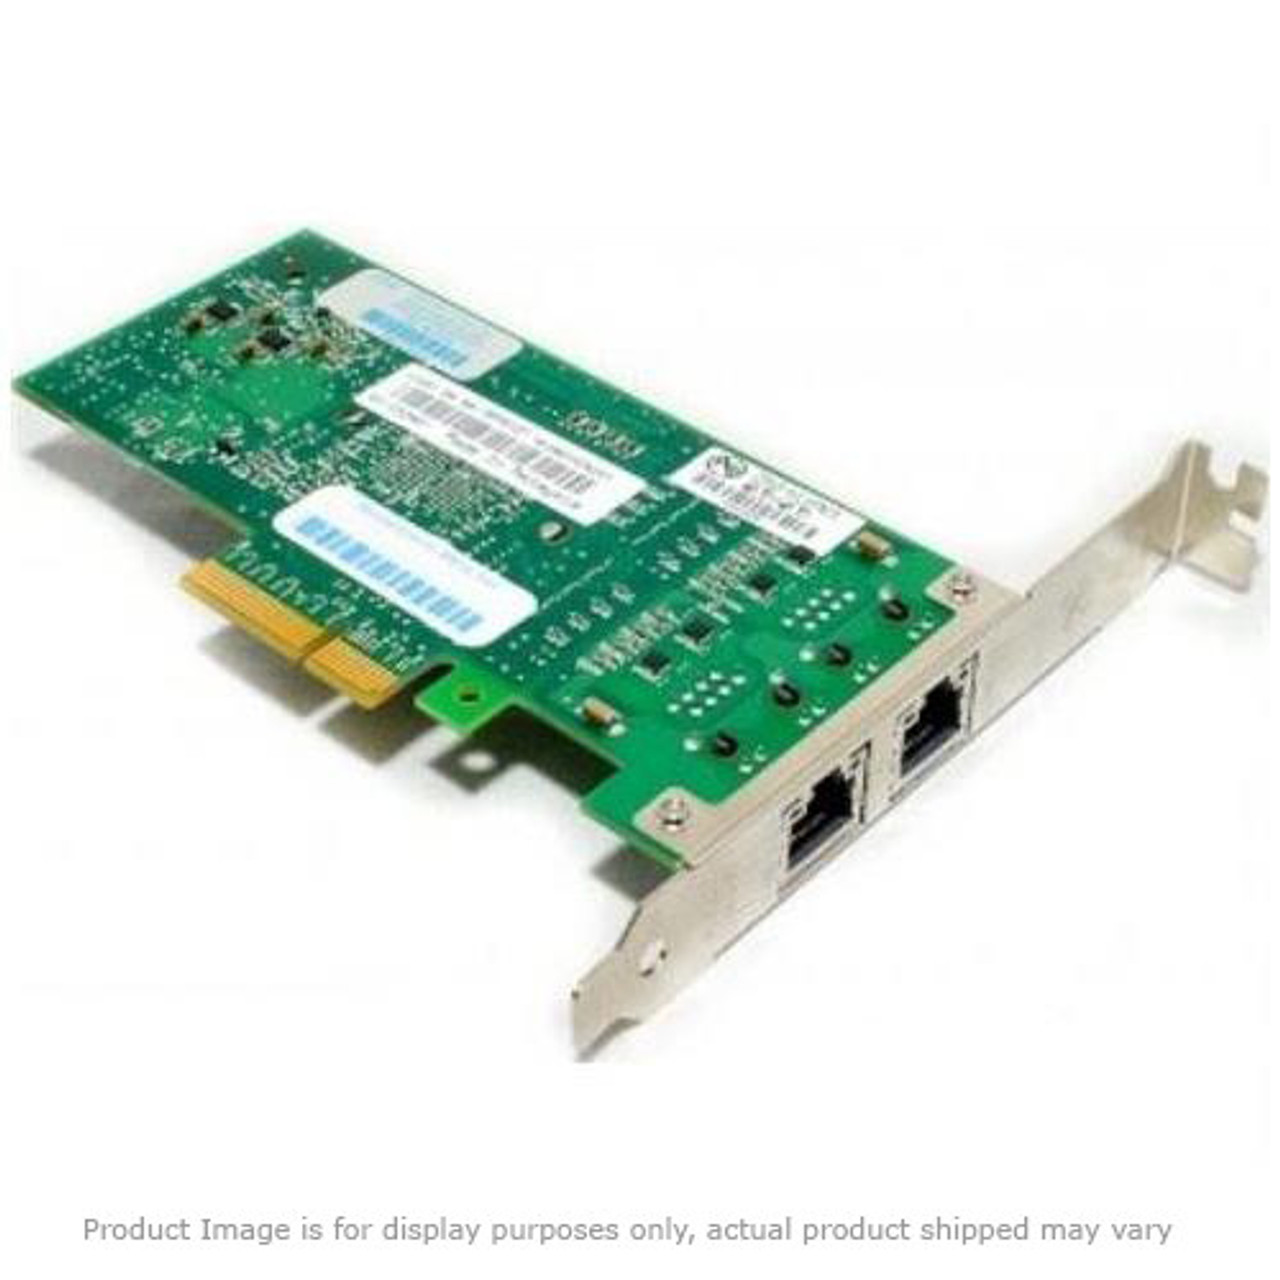 10L1423 IBM ThinkPad Mini-PCI Ethernet Card